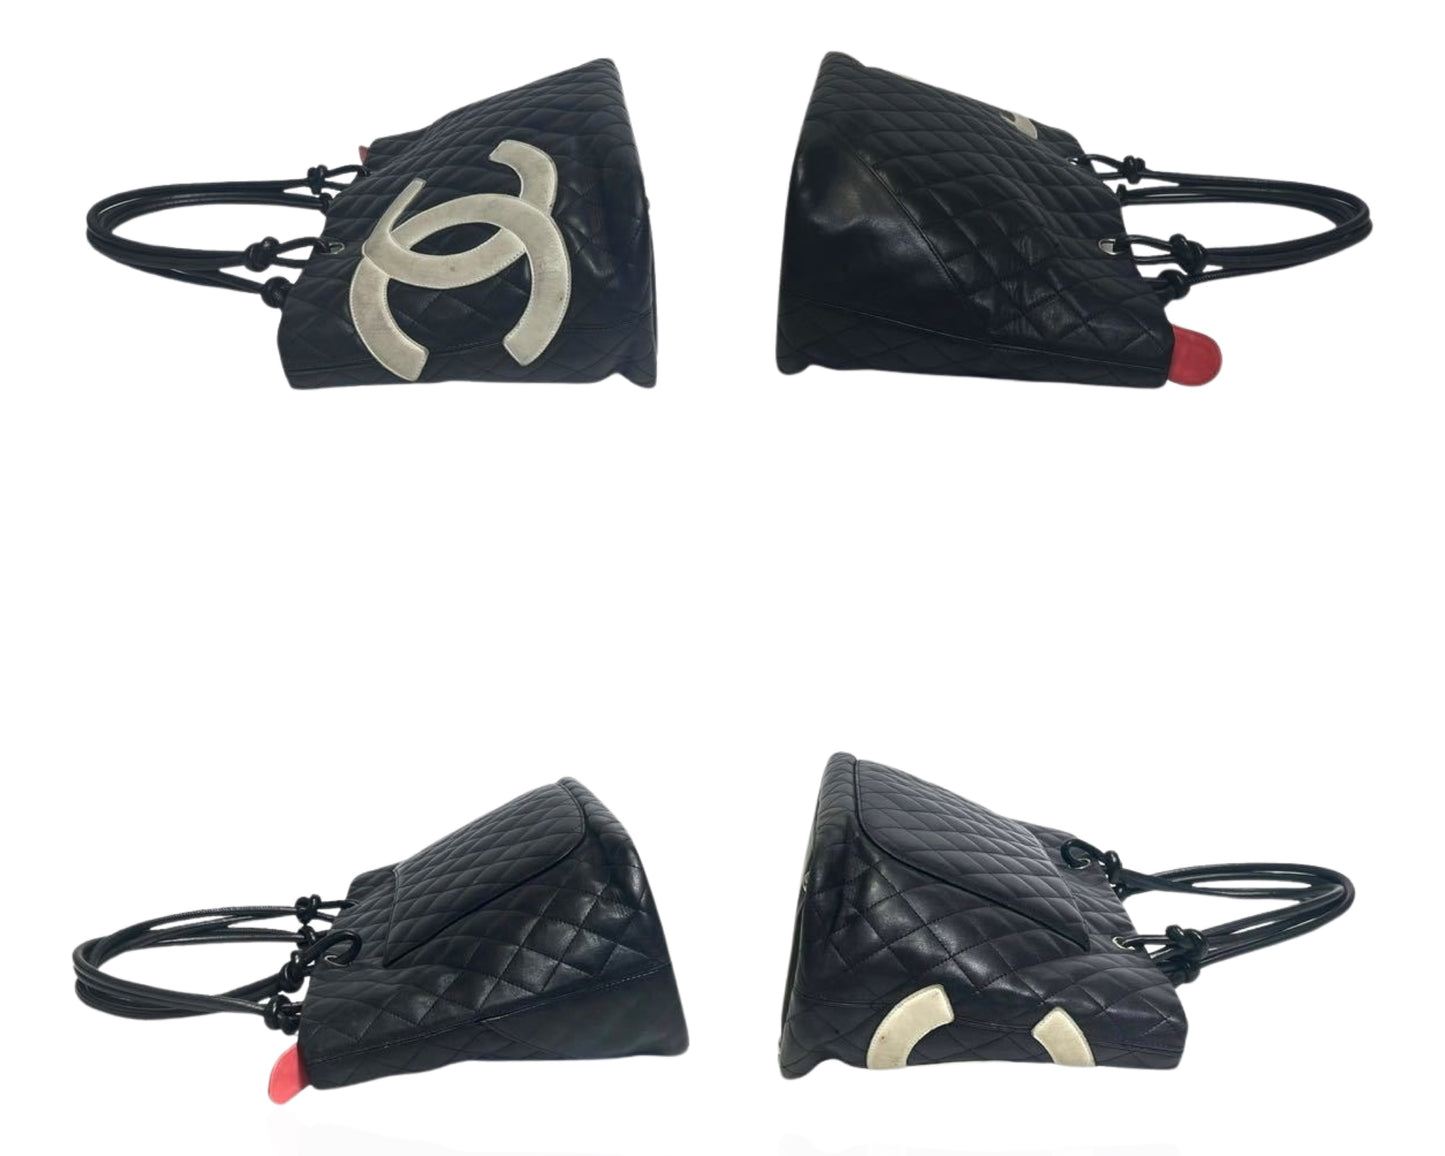 Chanel Cambon Tote Shoulder Bag Handbag Black Quilted Leather White